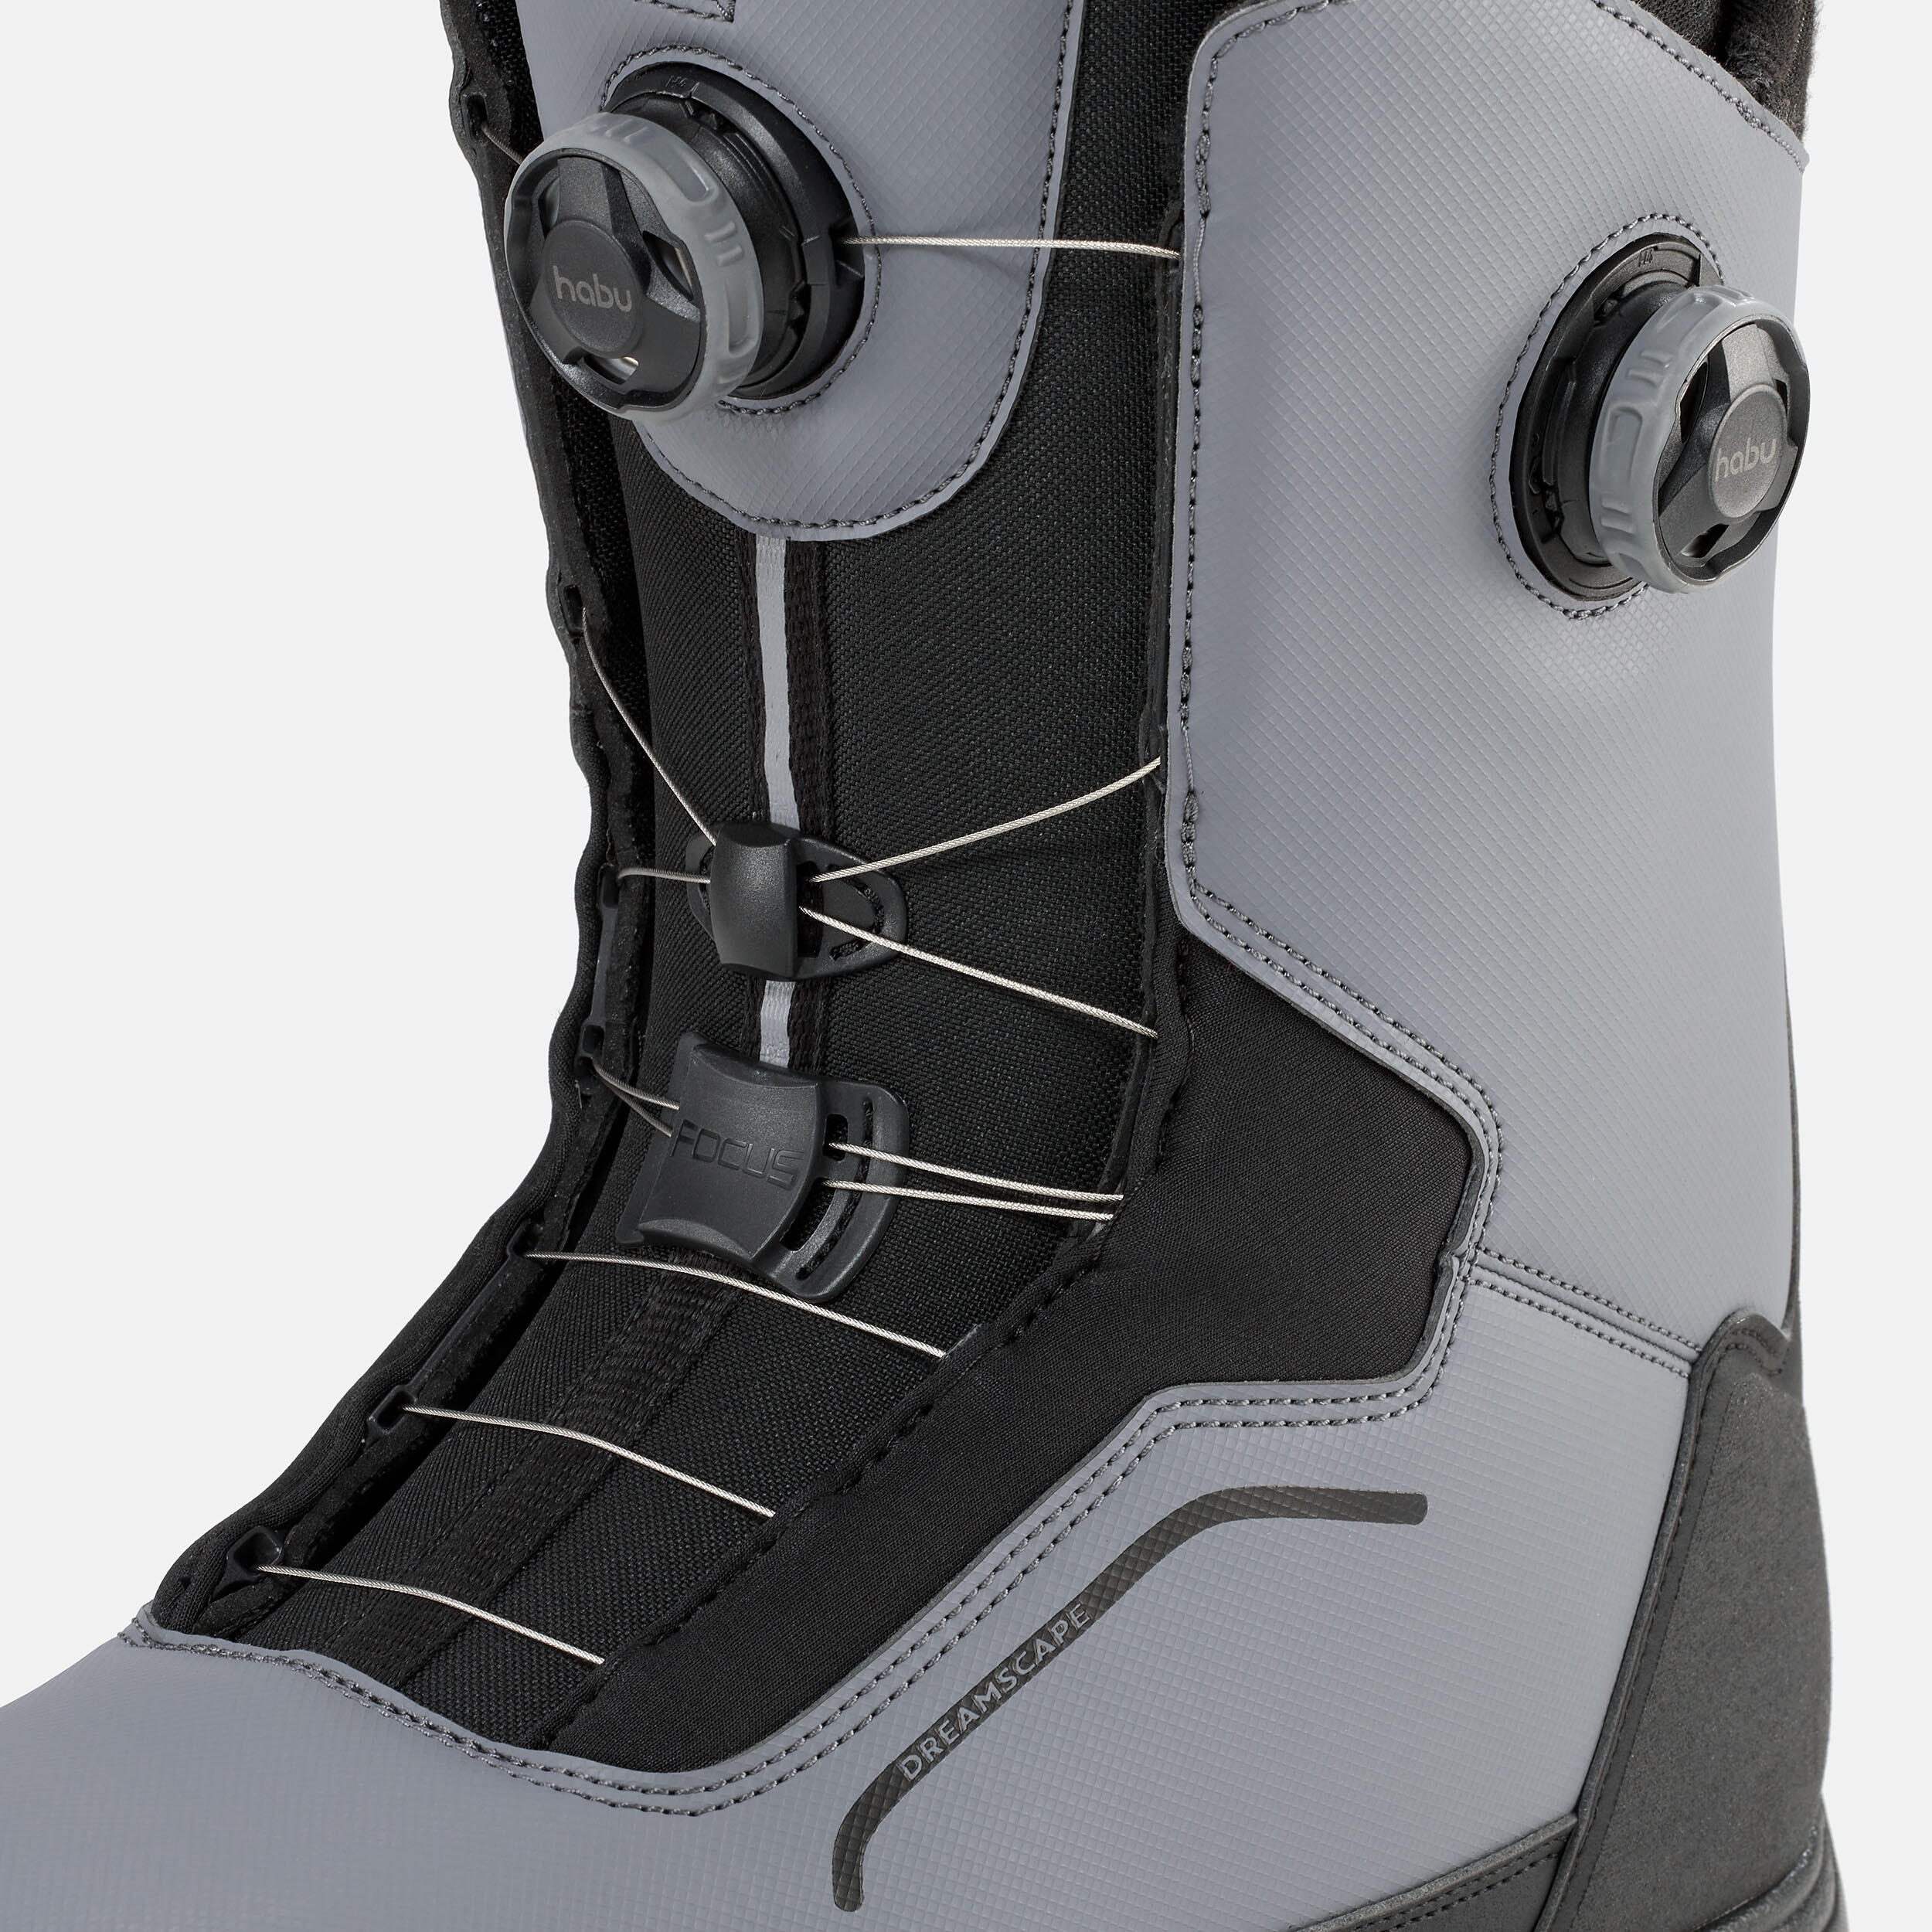 Double wheel snowboard boots, rigid flex - Allroad 900 Grey 11/15